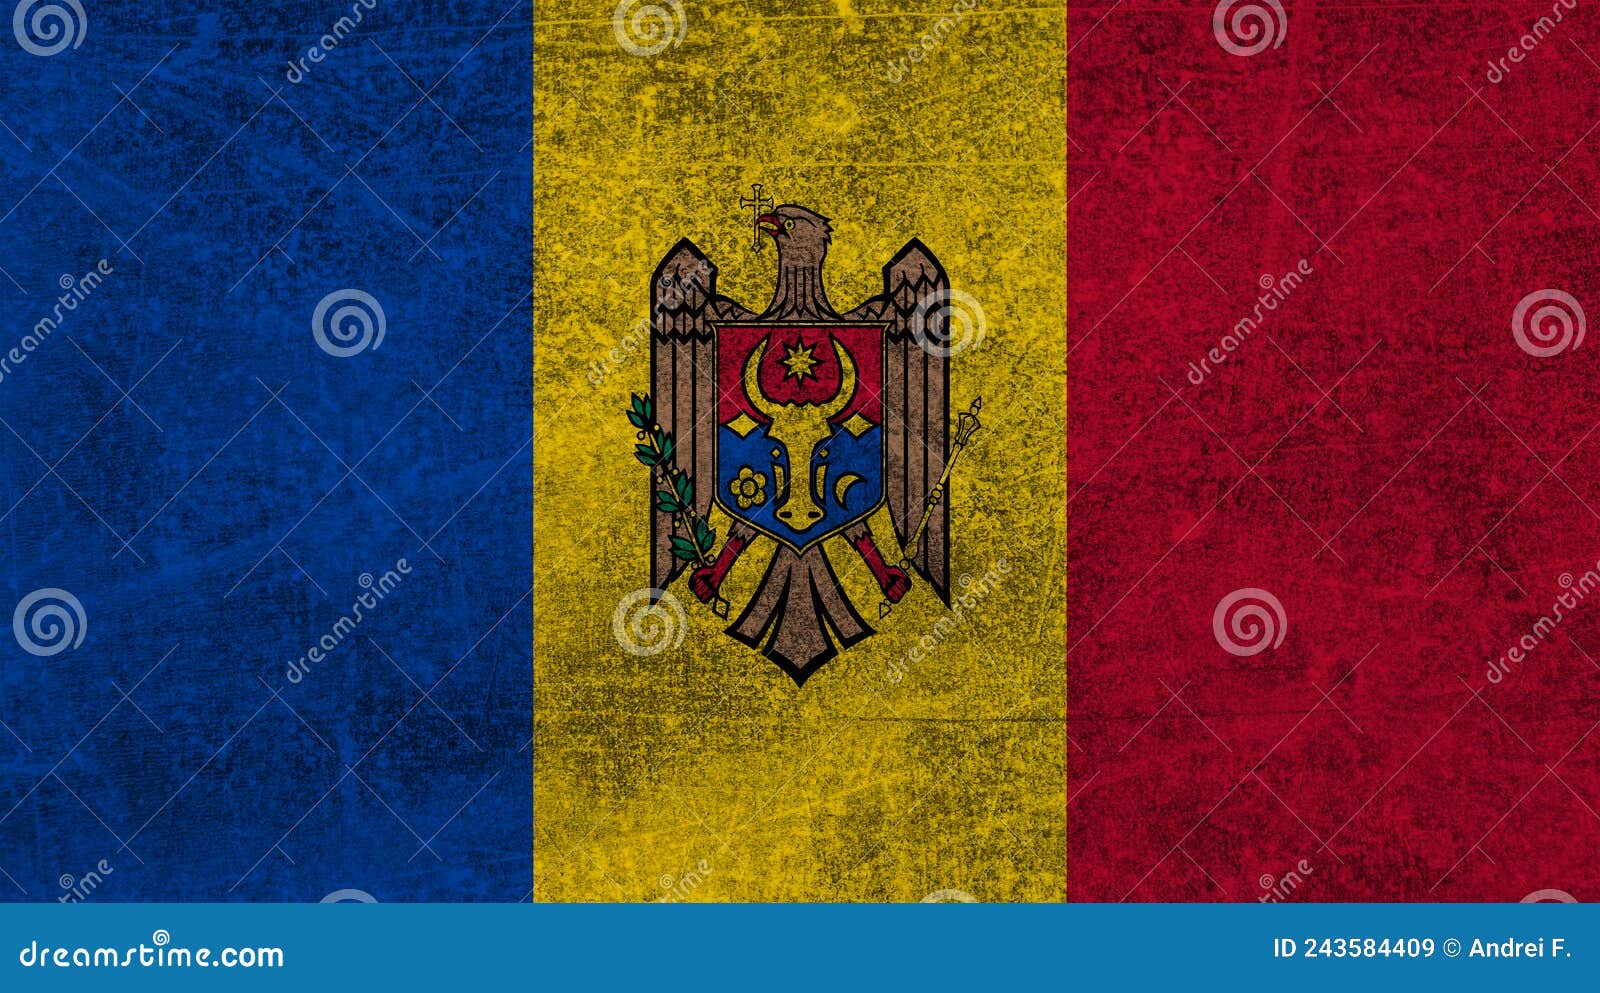 textured photo of the flag of moldova.